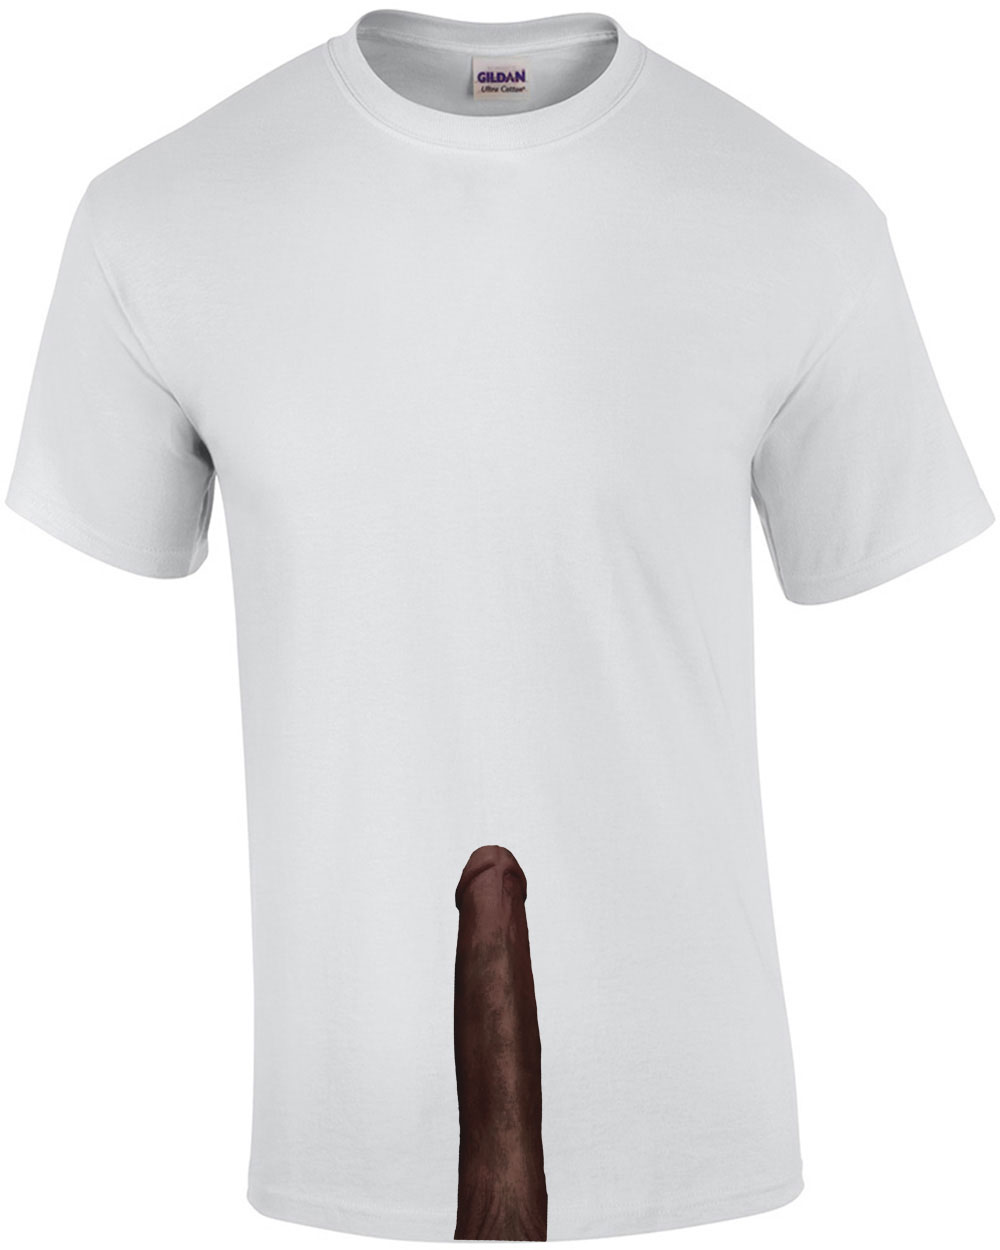 Black Penis Shirt T Shirt - roblox free i am gay t shirt